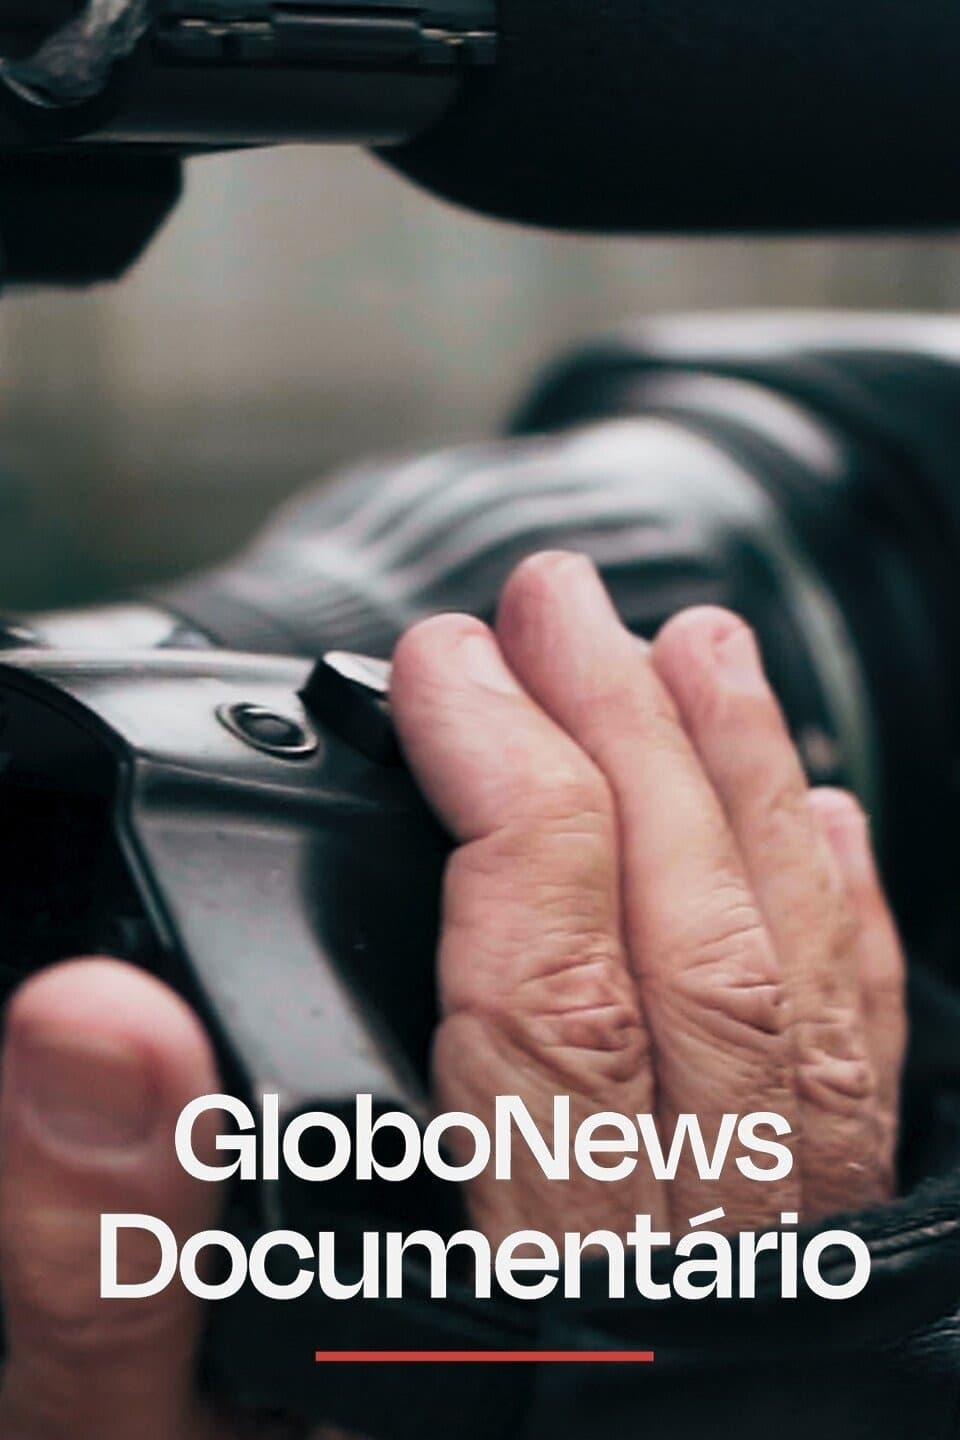 GloboNews Documentário